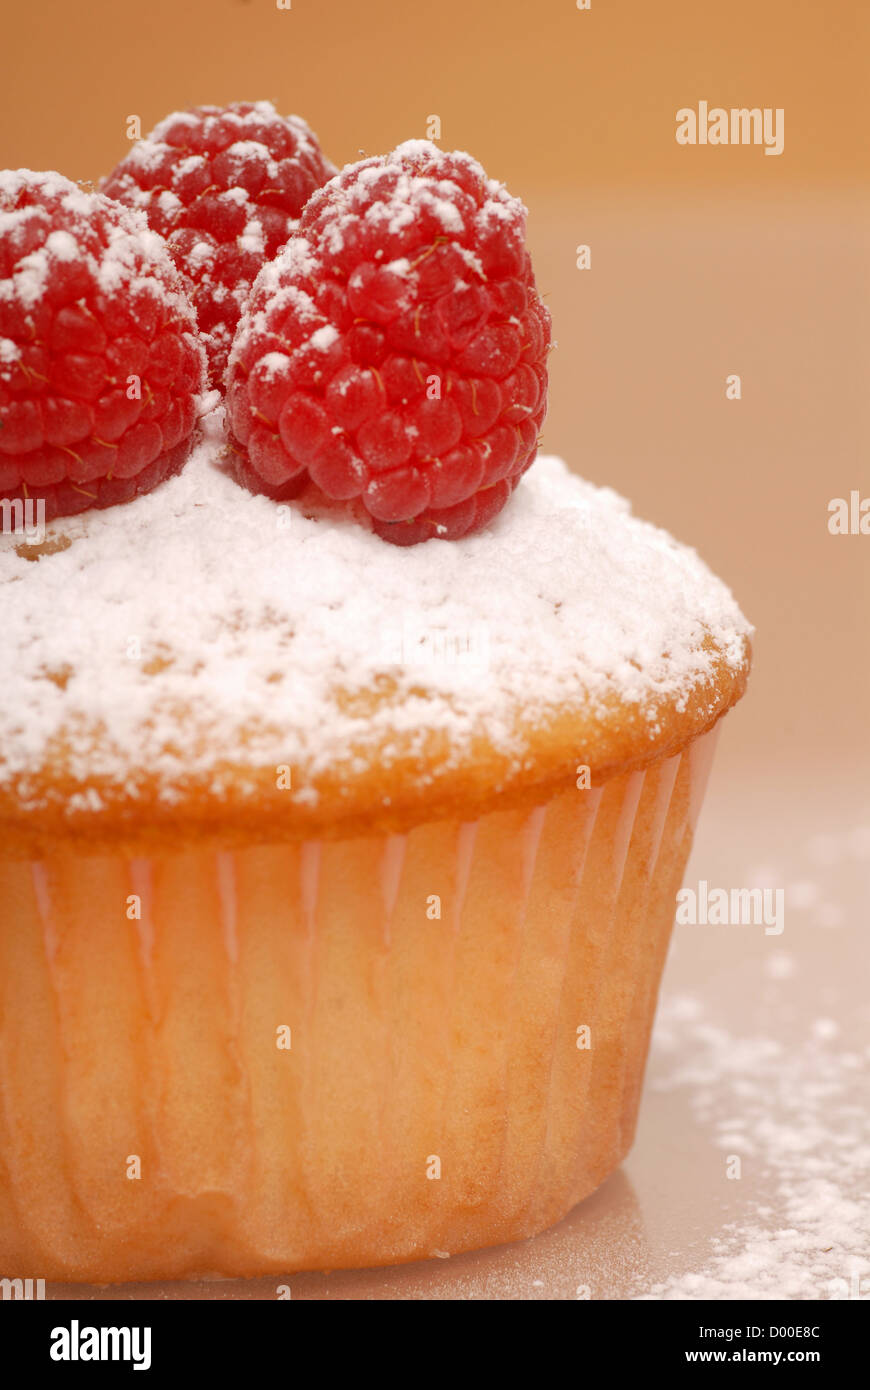 Closeup of freshly baked vanilla cupcake with raspberries and powdered sugar Stock Photo